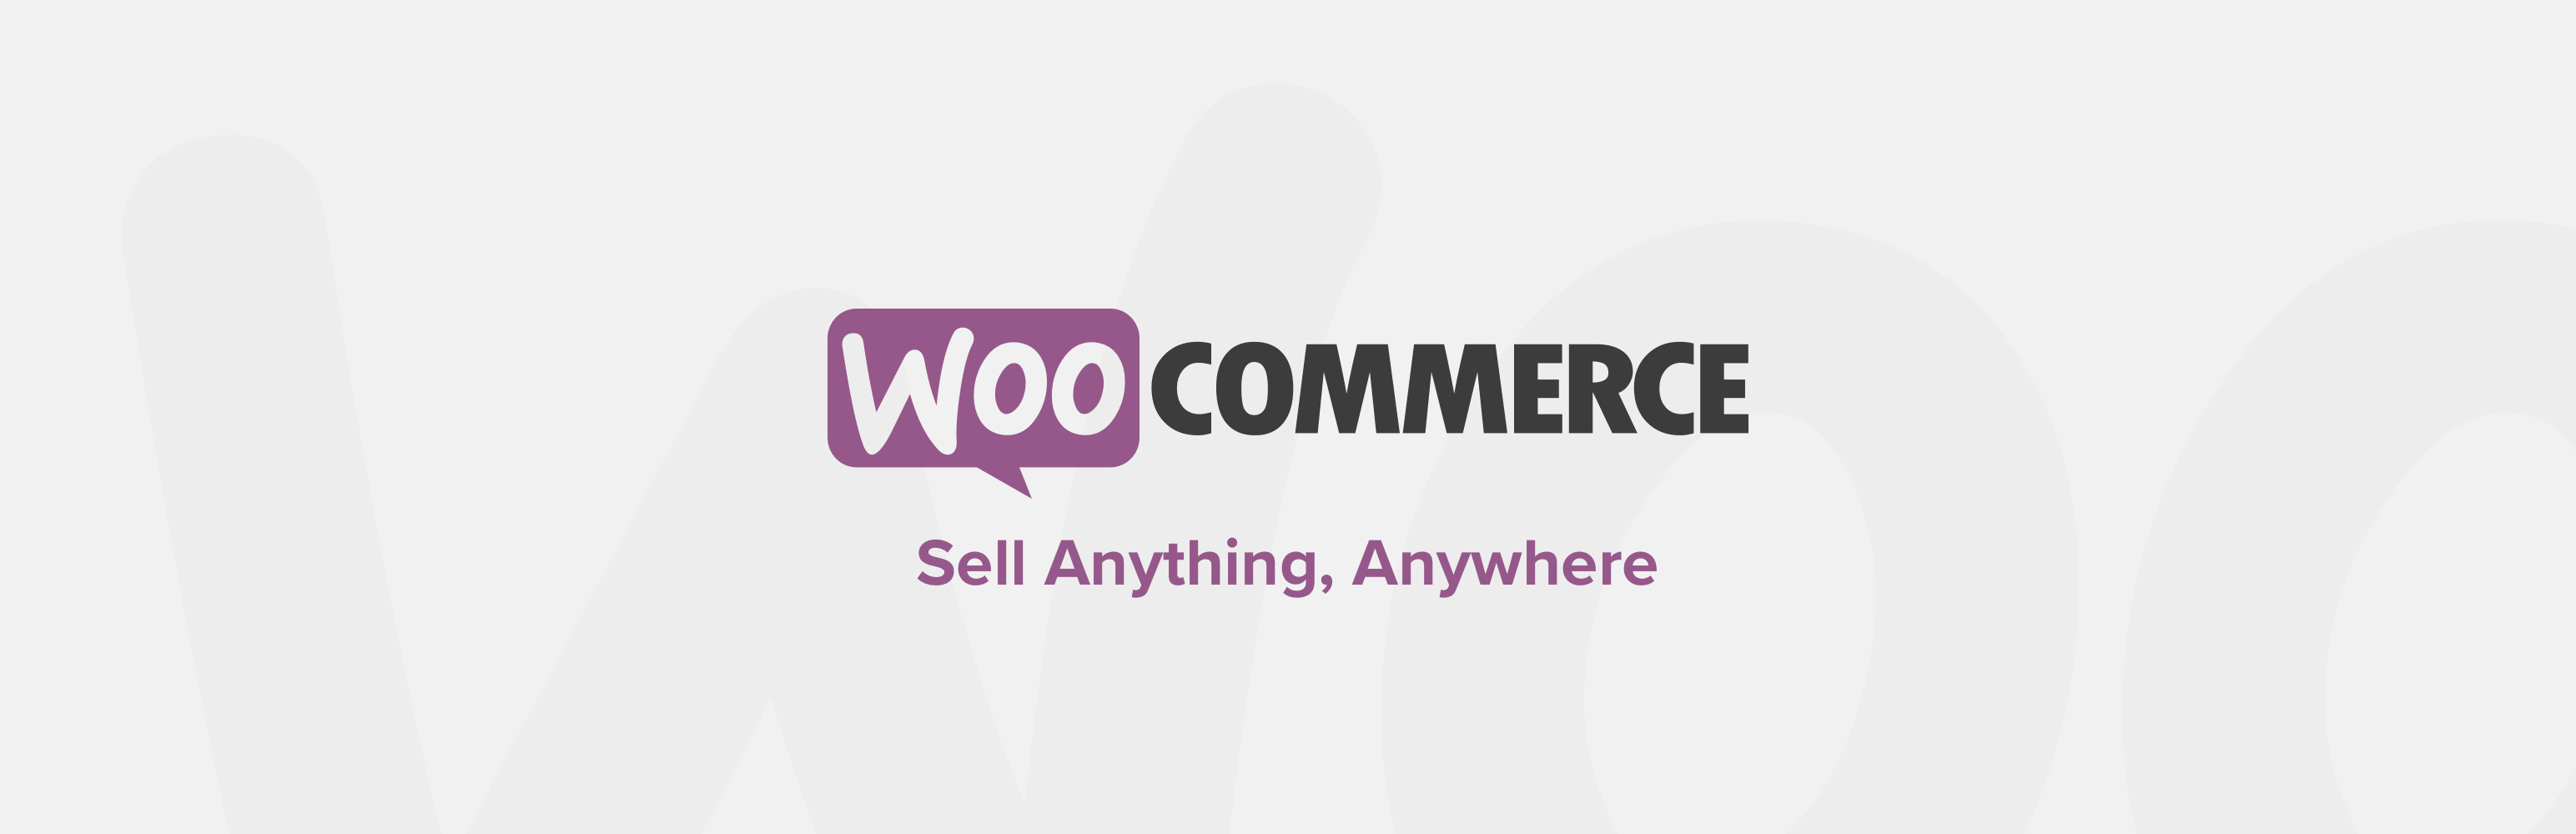 Woocommerce - WordPress plugin